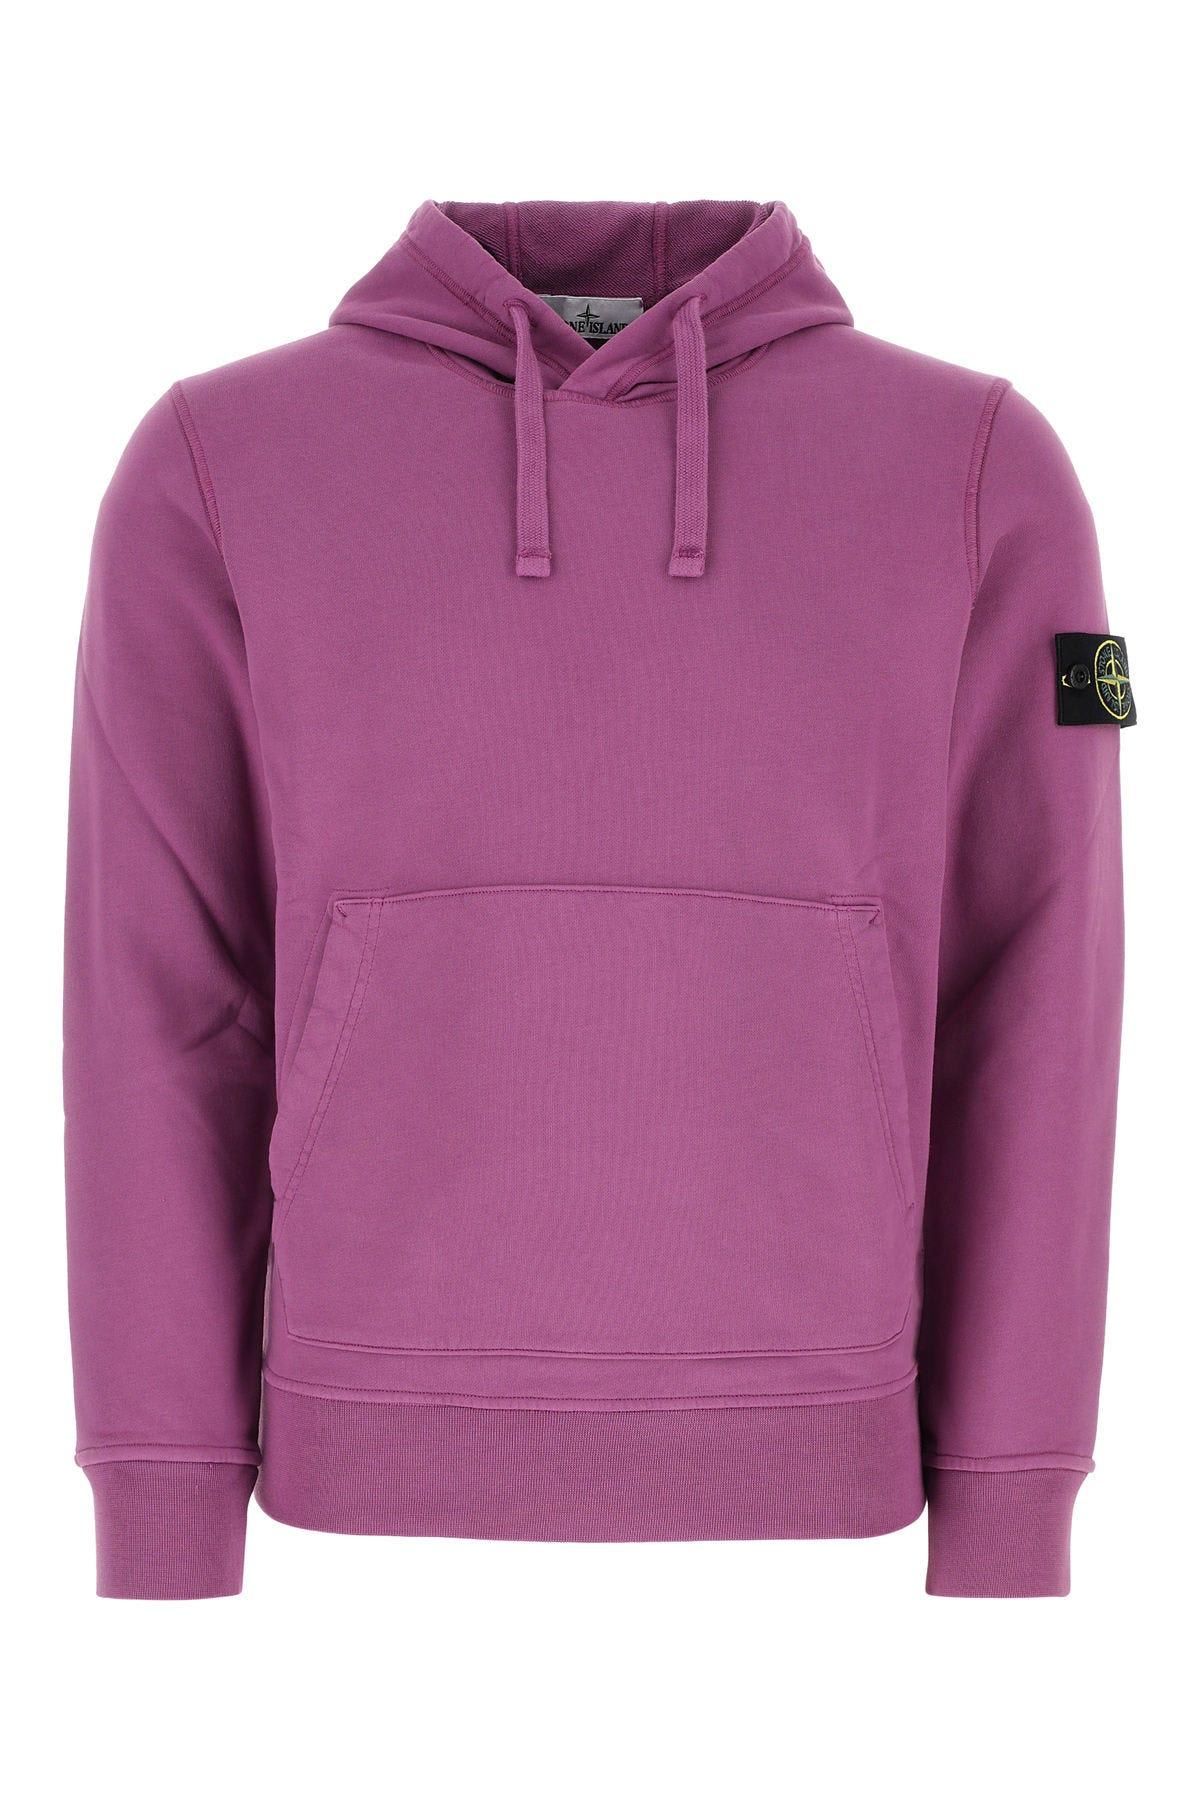 Stone Island Purple Cotton Sweatshirt